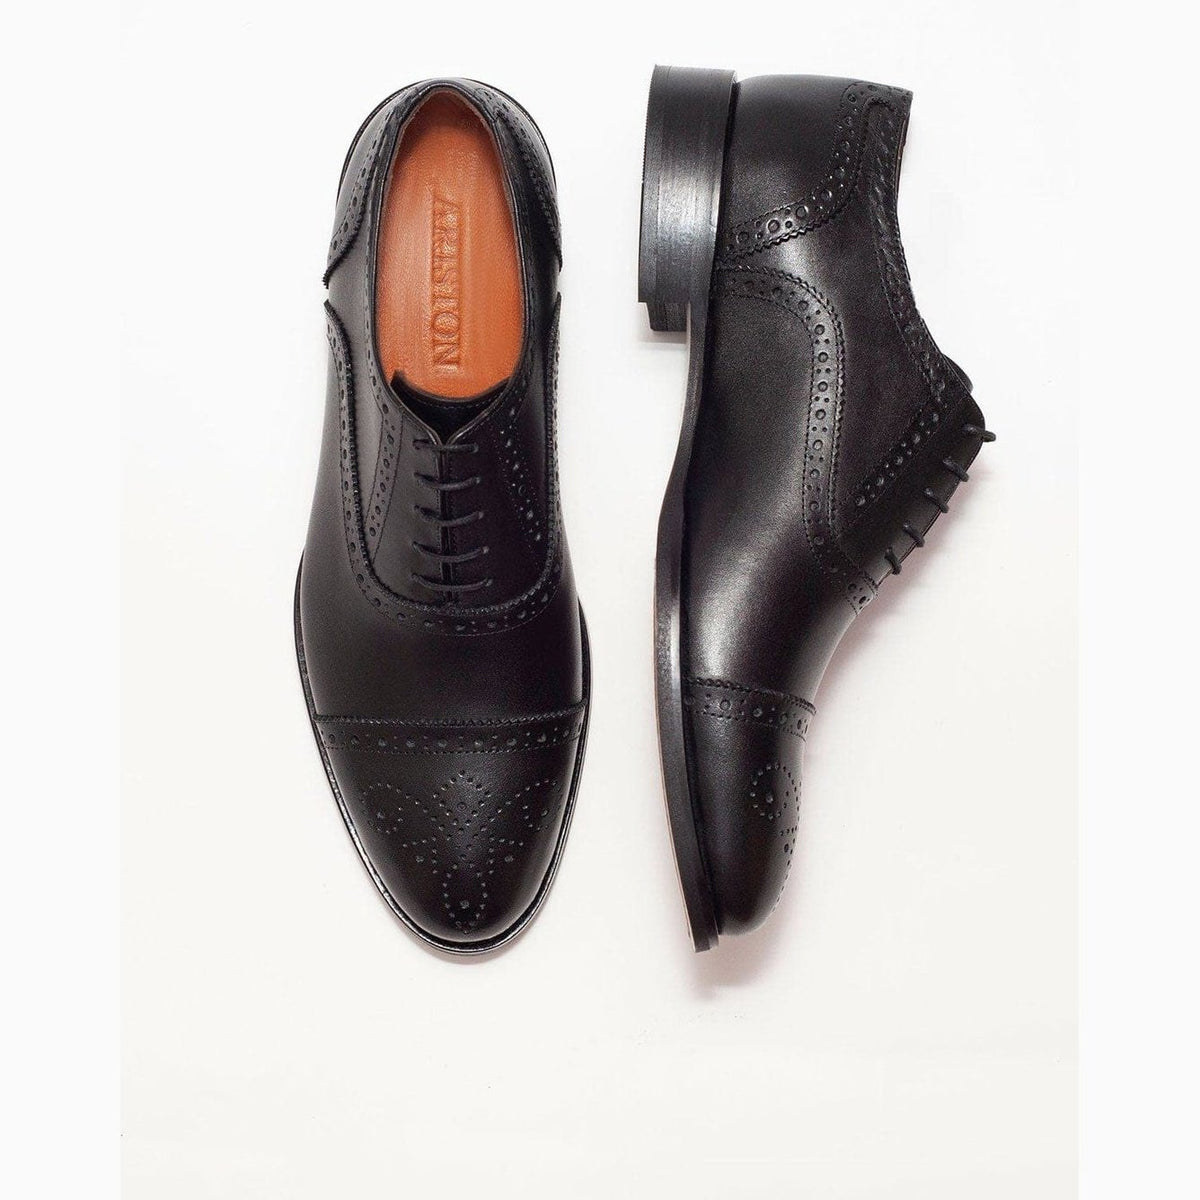 Ariston SHOES Ariston Mens Black Oxford Lace-up Leather Dress Shoes